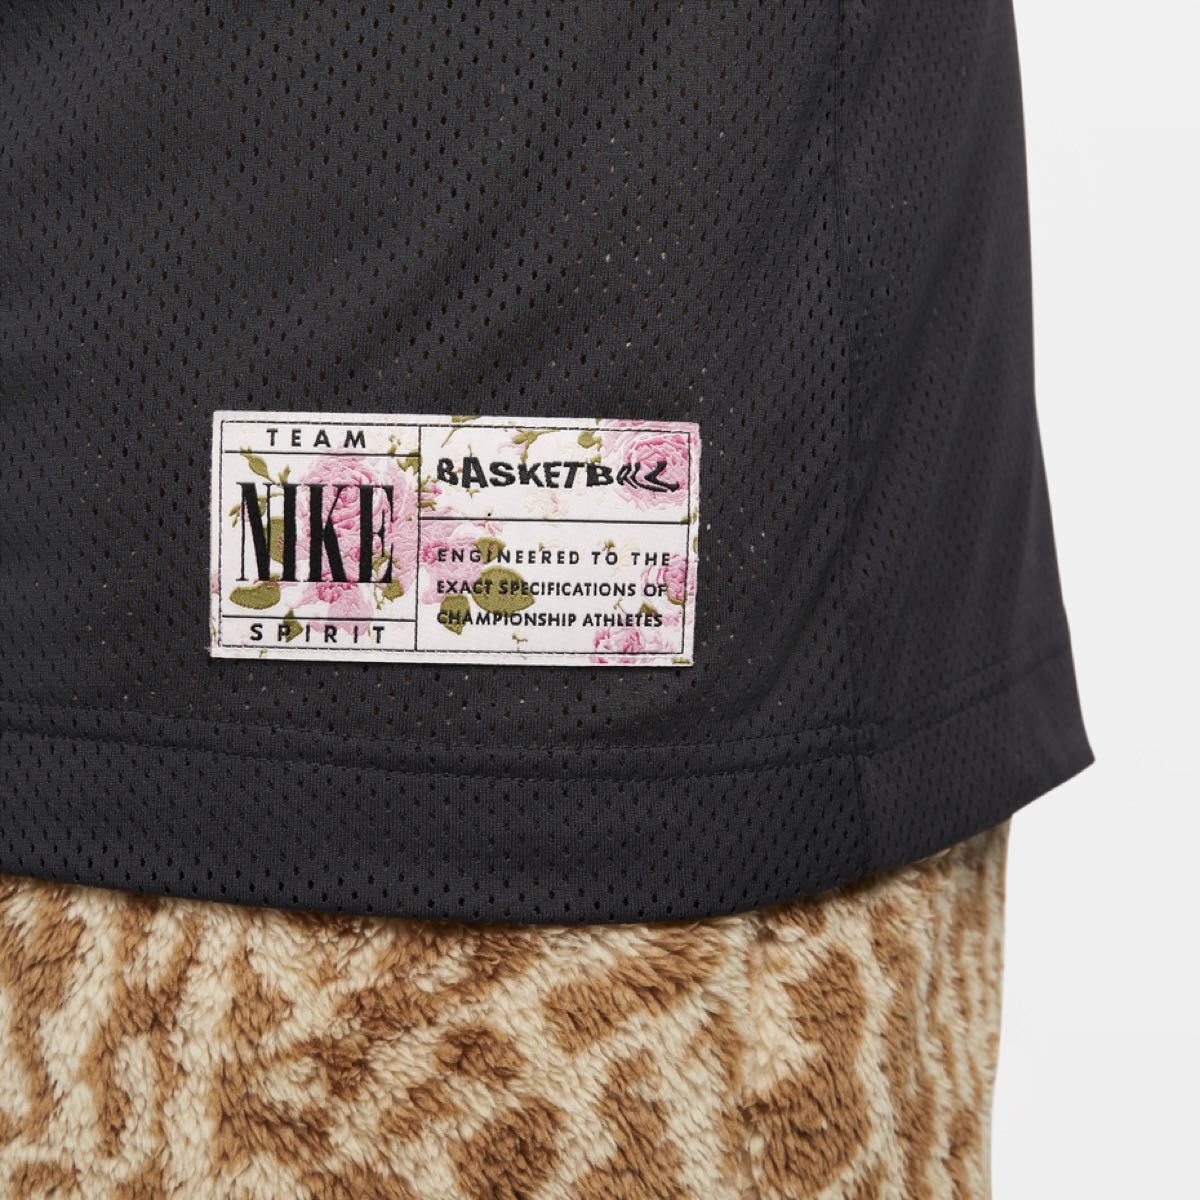 NIKE BASKETBALL ゲームシャツ タンクトップ ナンバリング ブラック レッド バスケ スラムダンク 新品 L